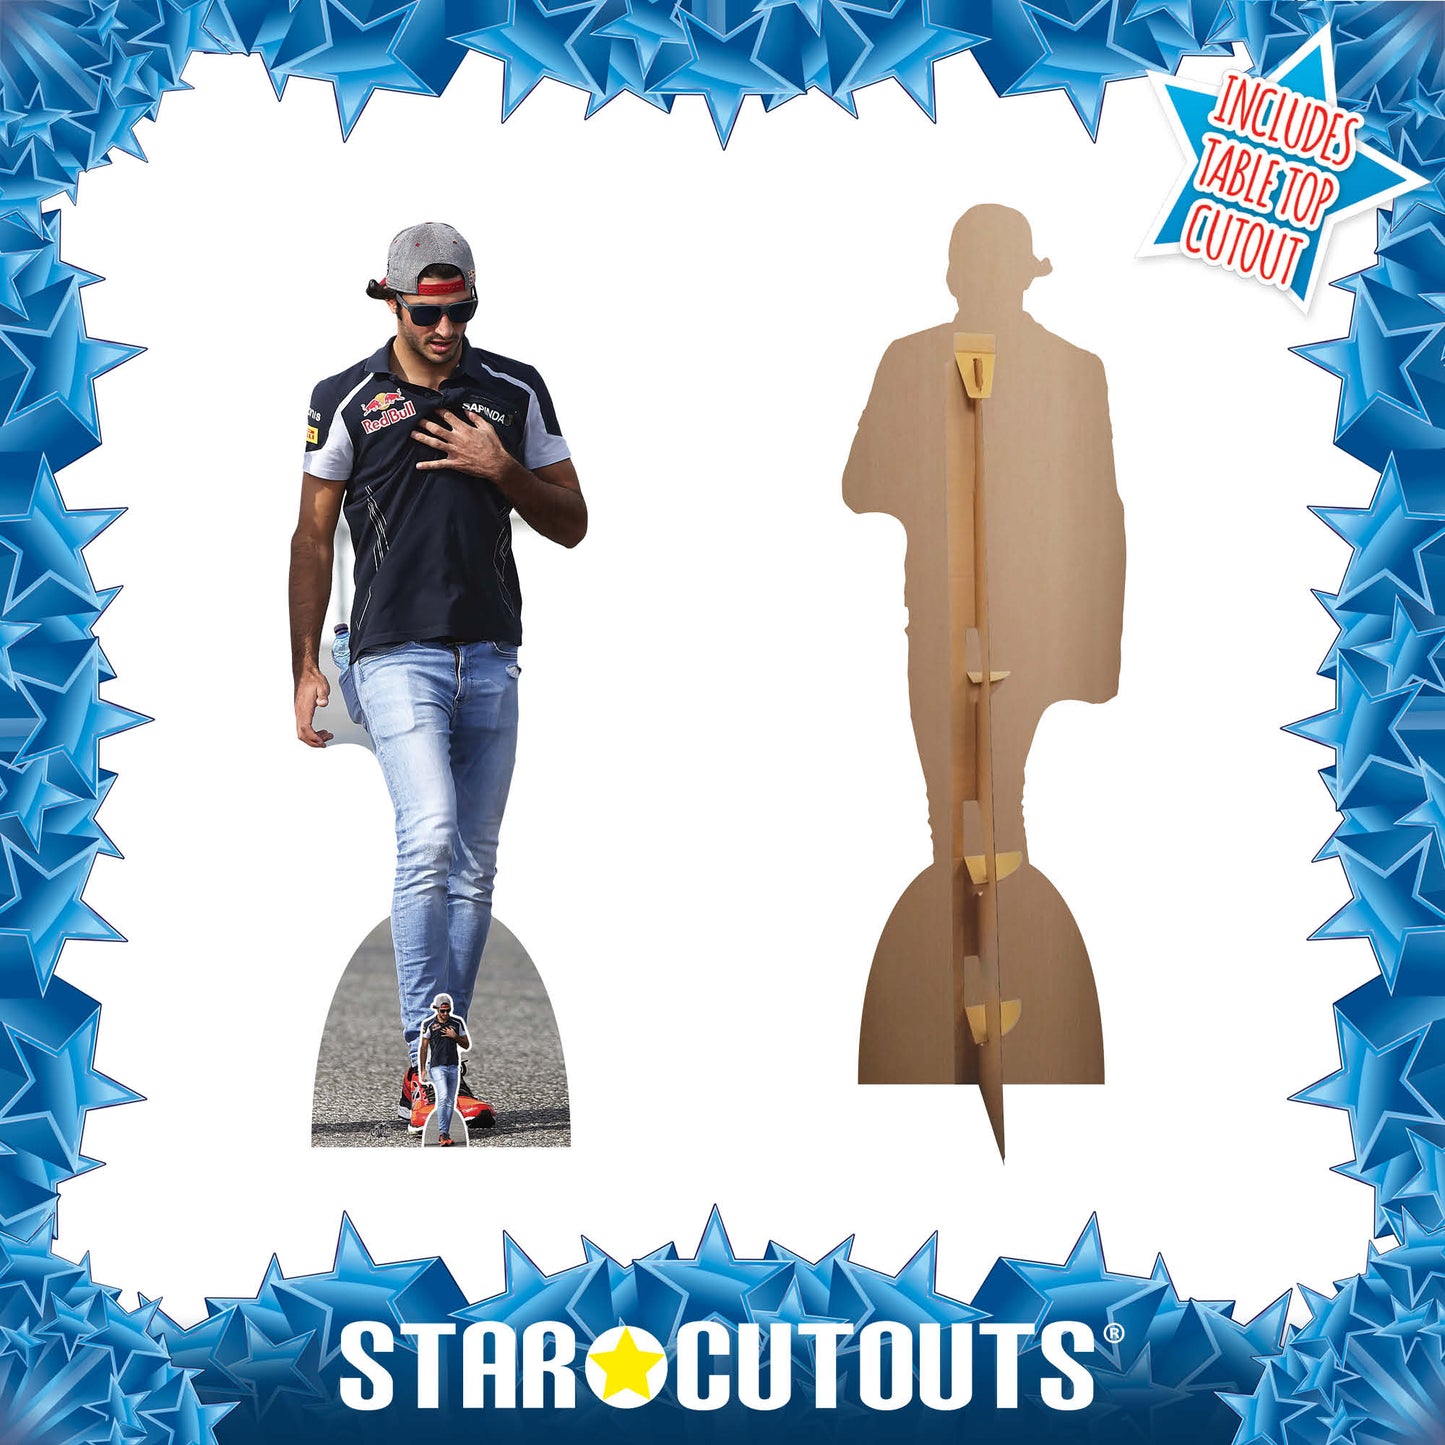 Carlos Sainz Cardboard Cutout Life Size with Mini Cutout